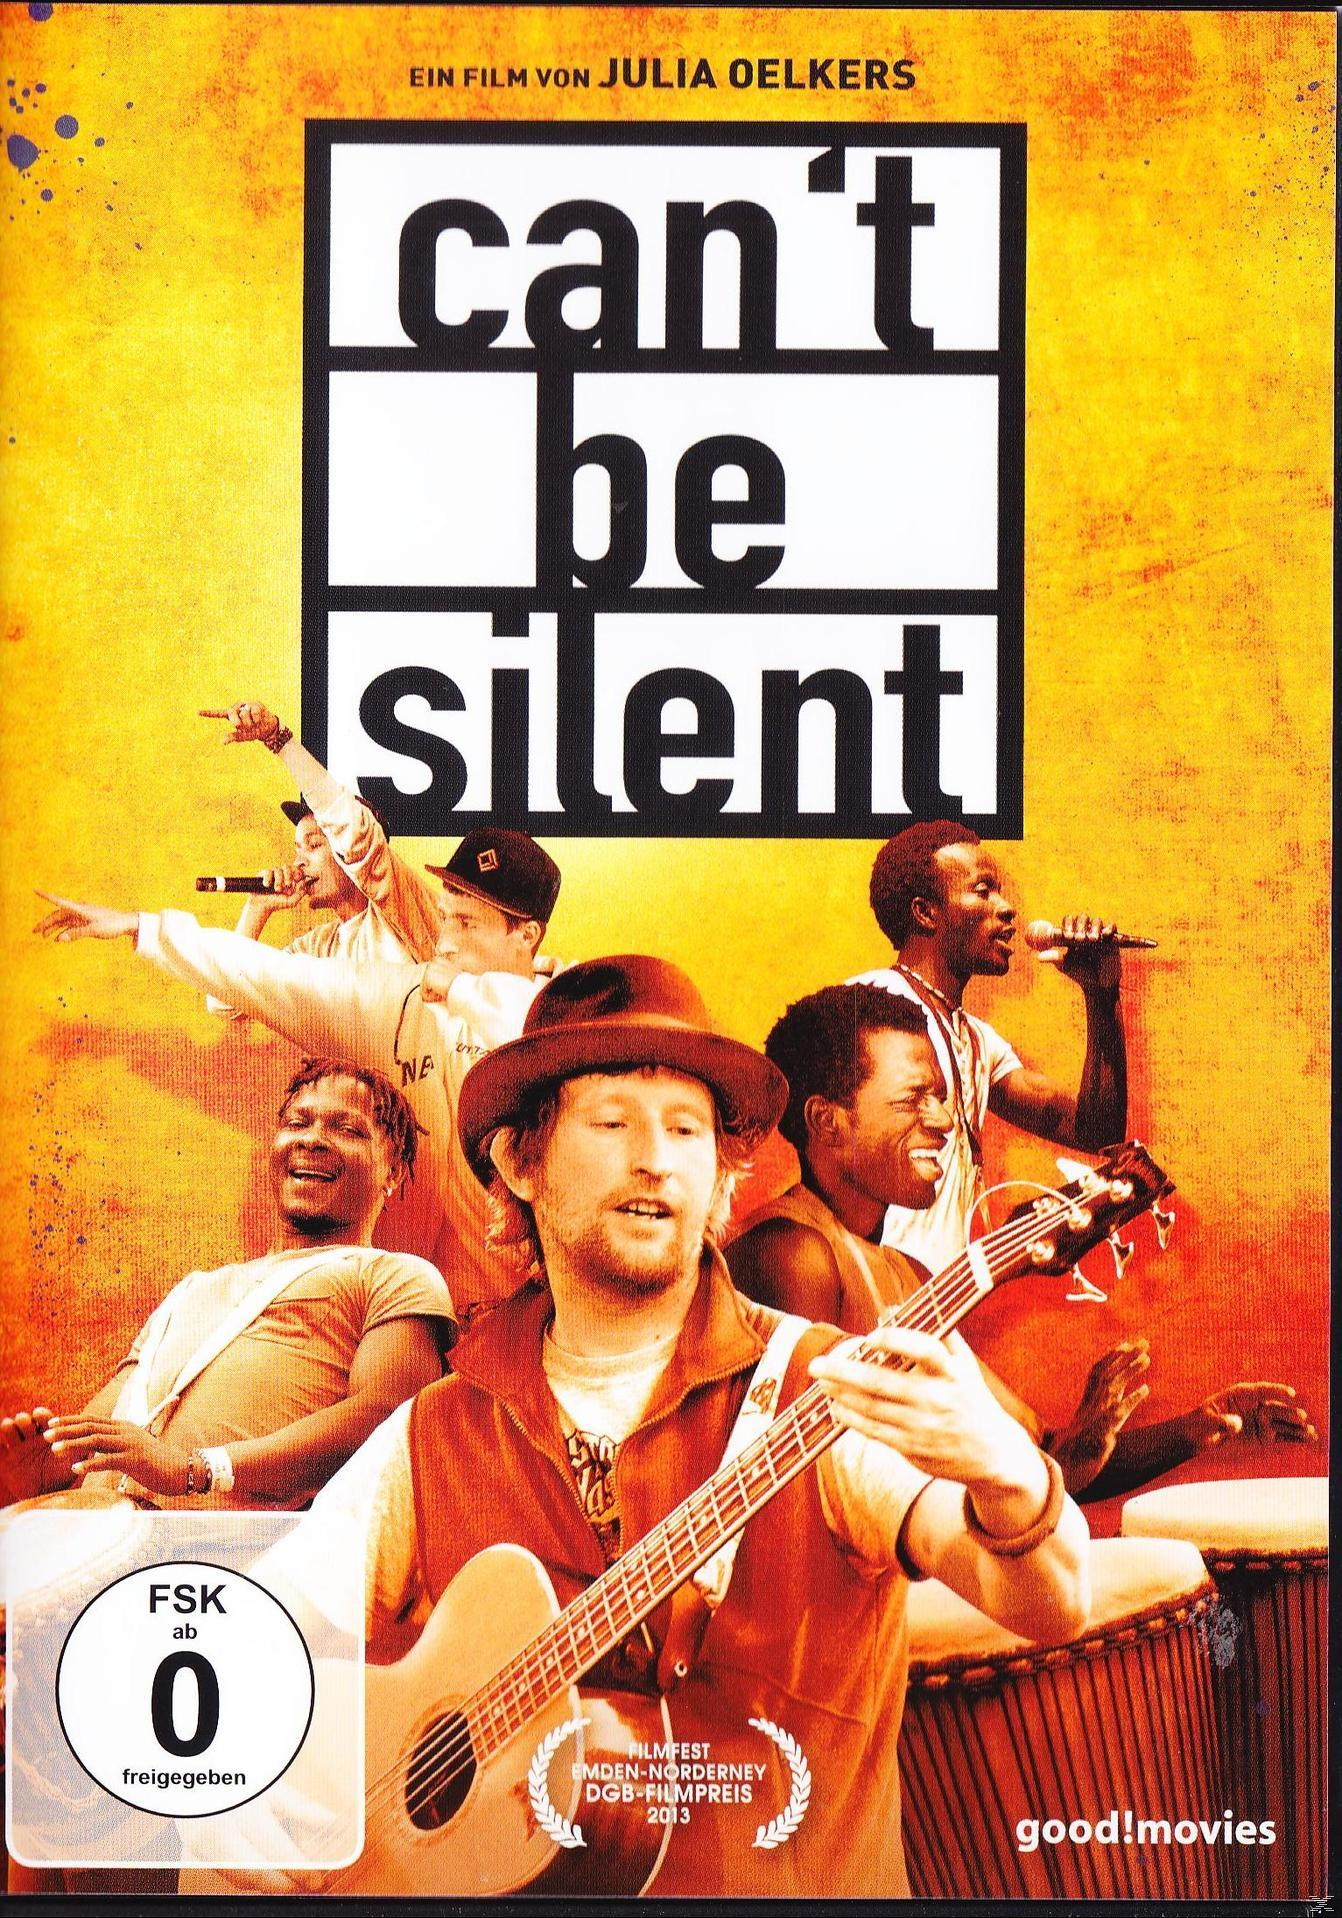 CAN T SILENT BE (+BONUS) DVD